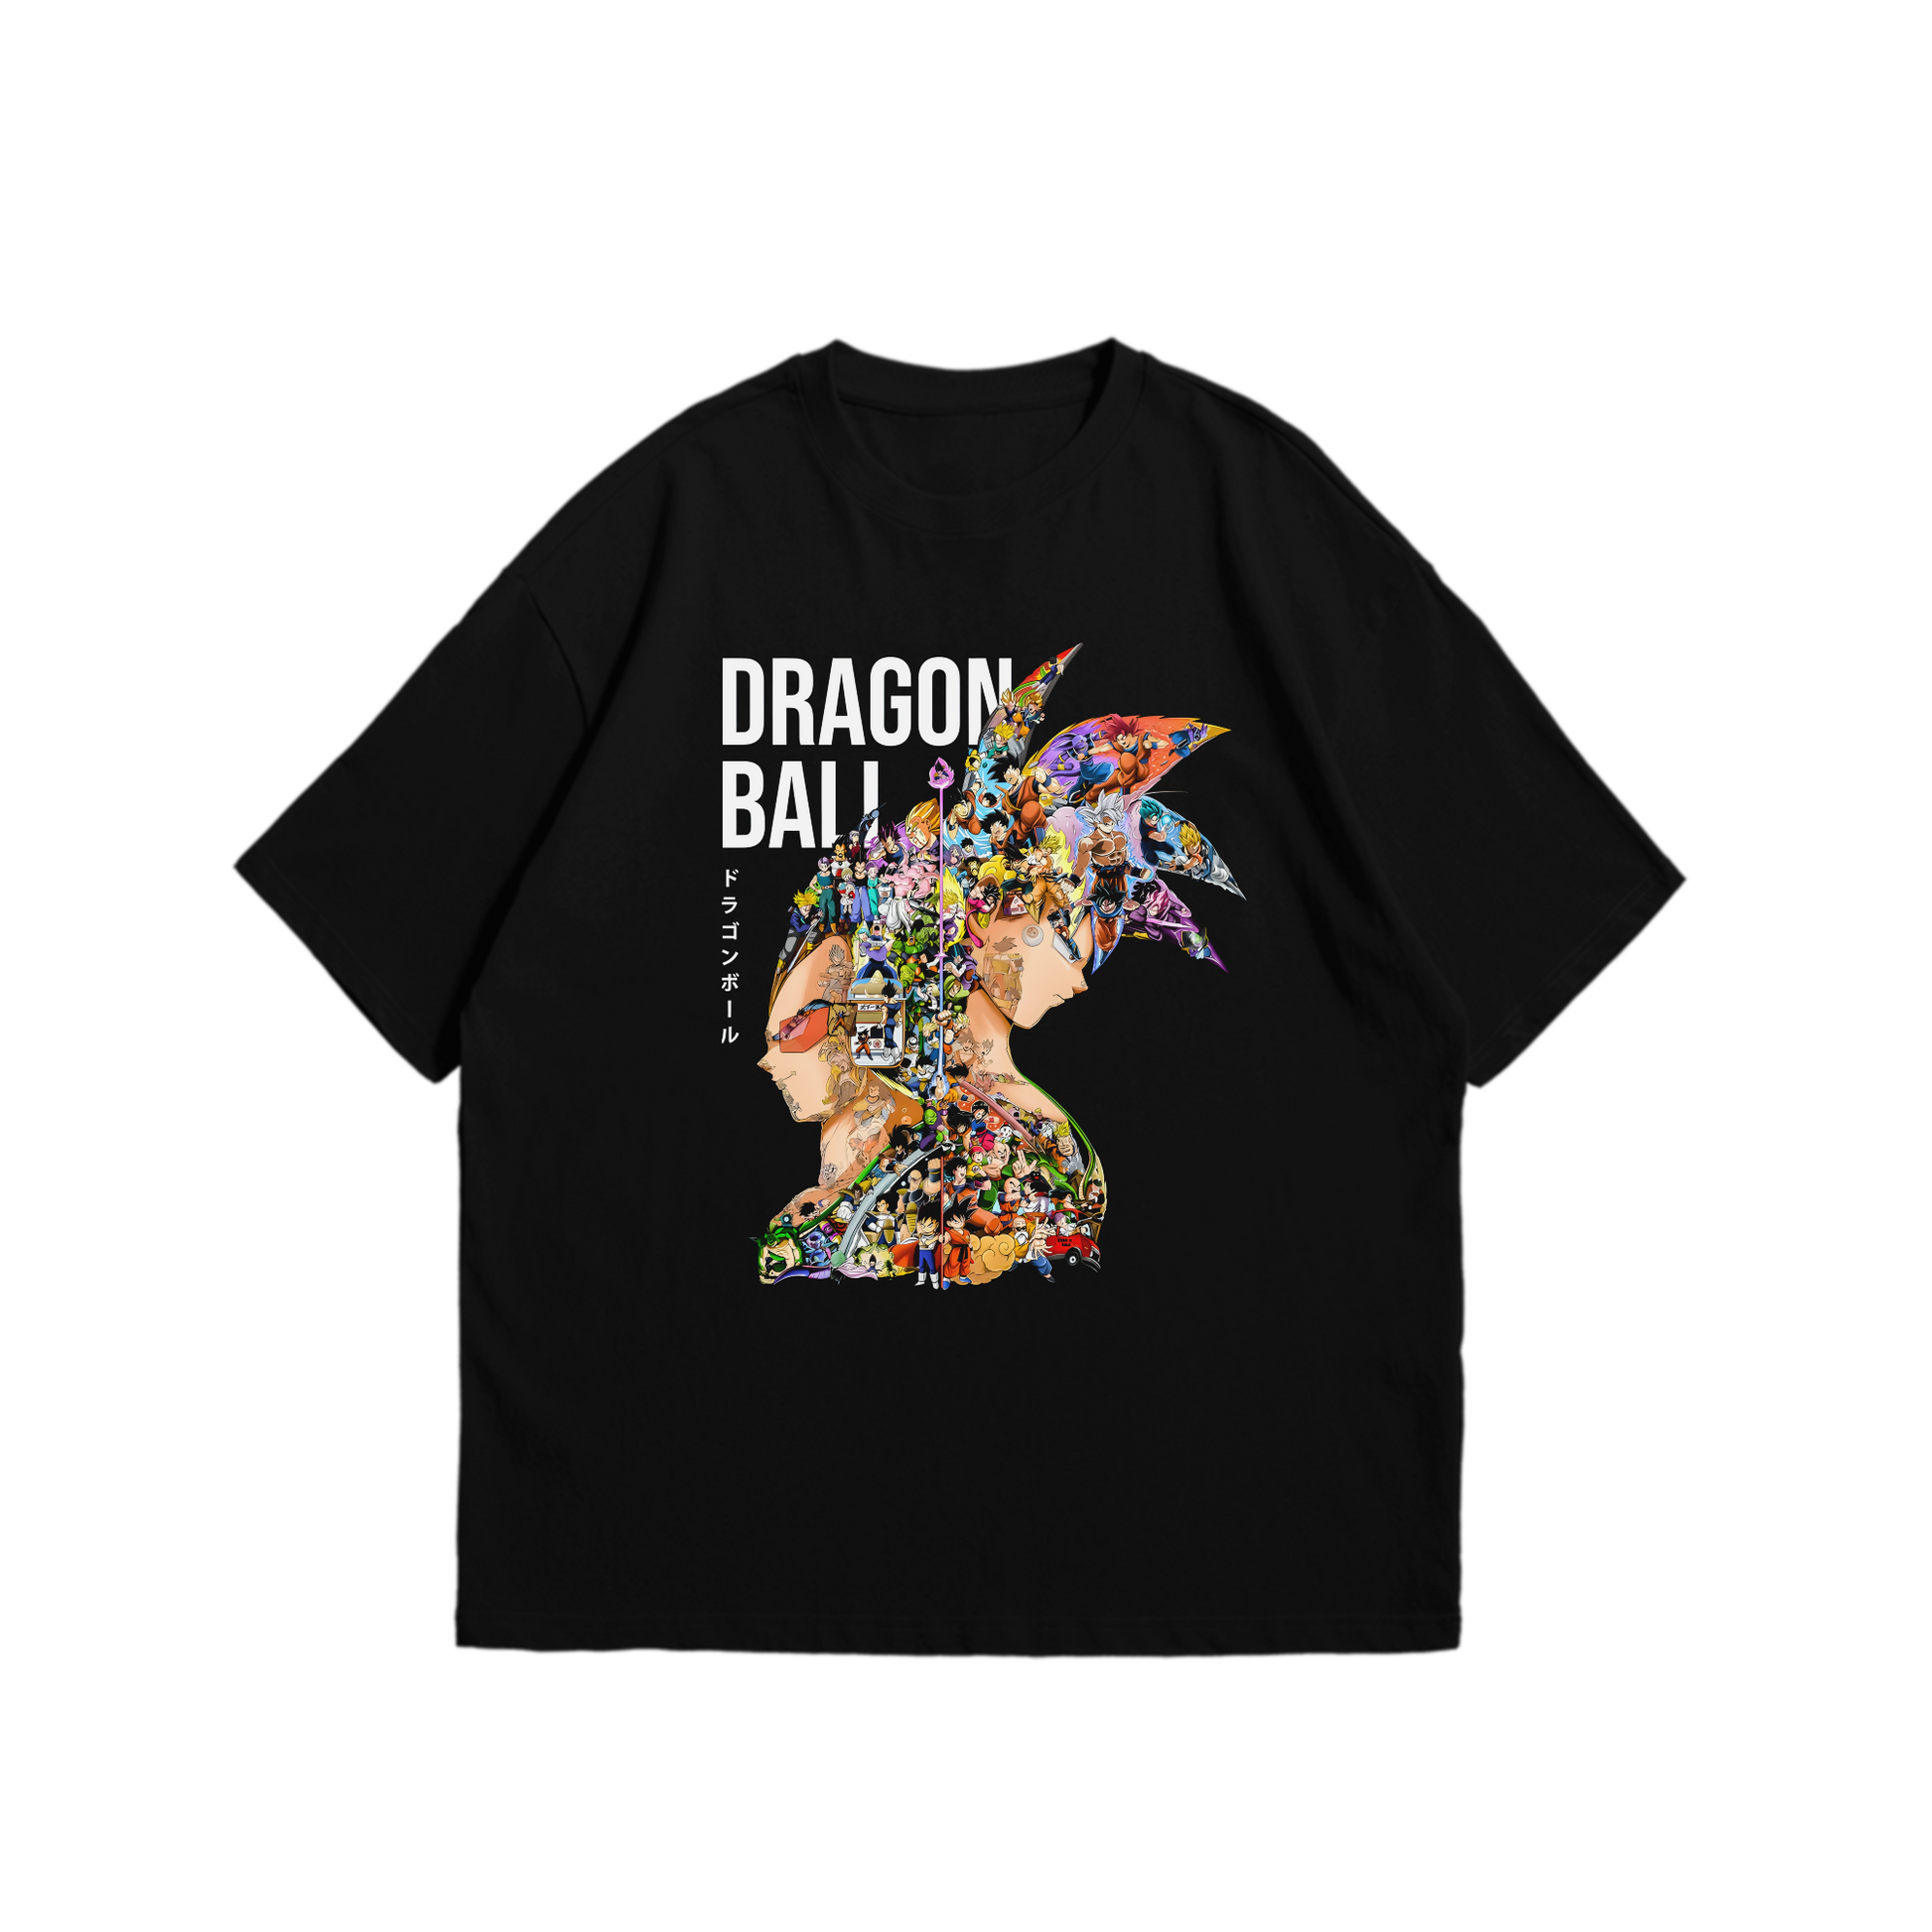 Goku and Vegeta from dragon ball z Oversized tshirt